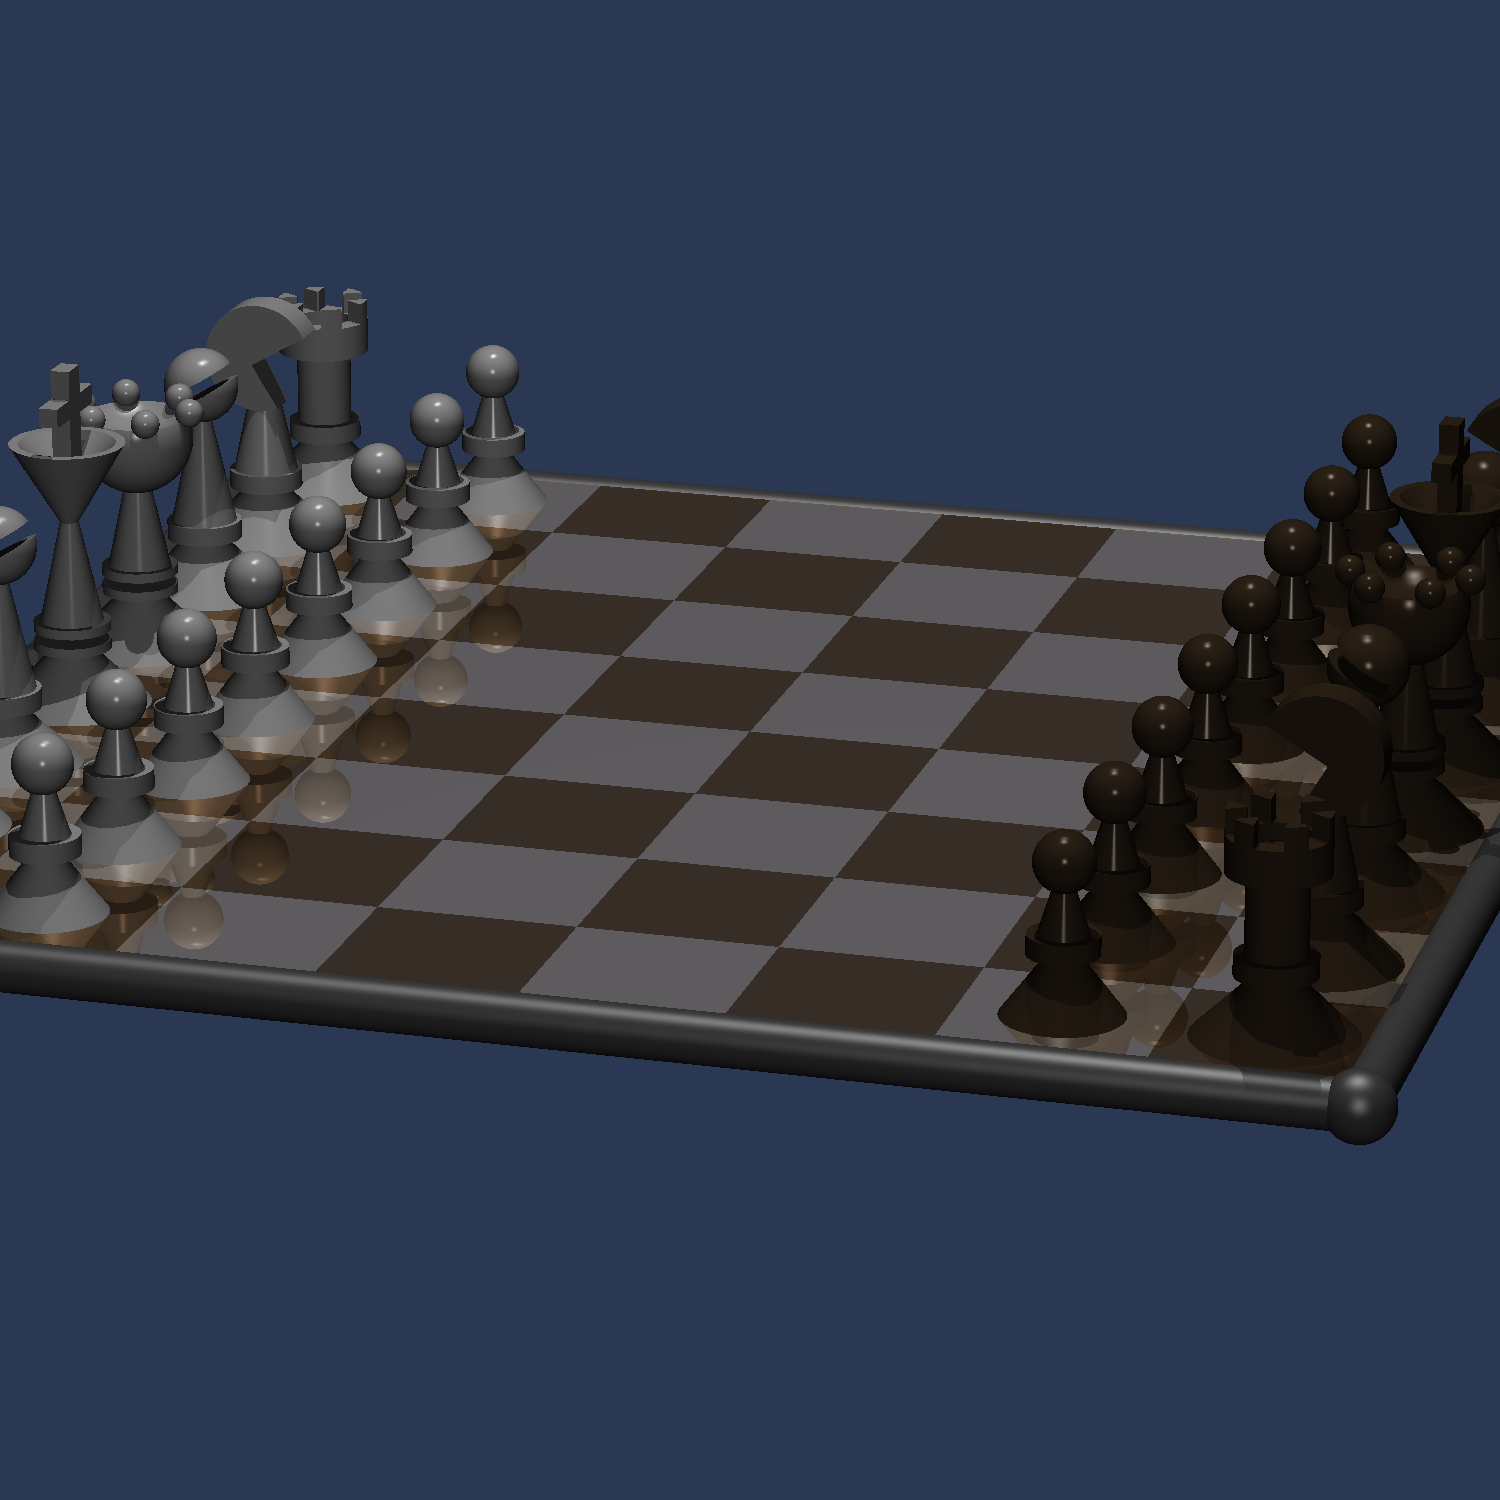 A chessboard model wit linear tonemapping